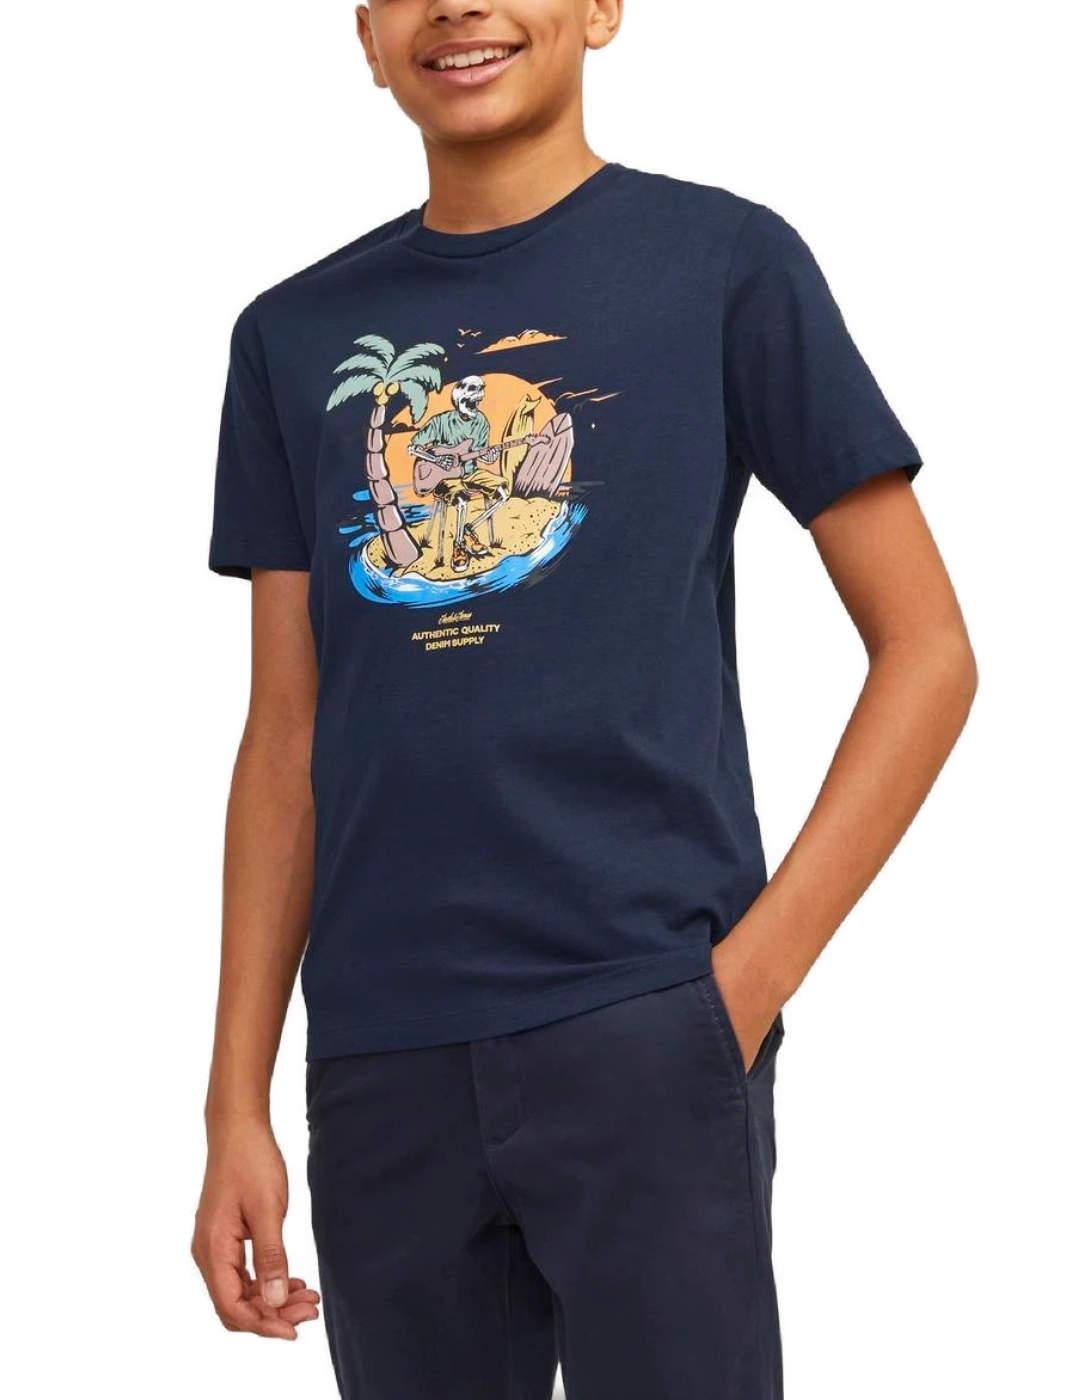 Camiseta Jack&Jones Junior Zipon marino manga corta de niño